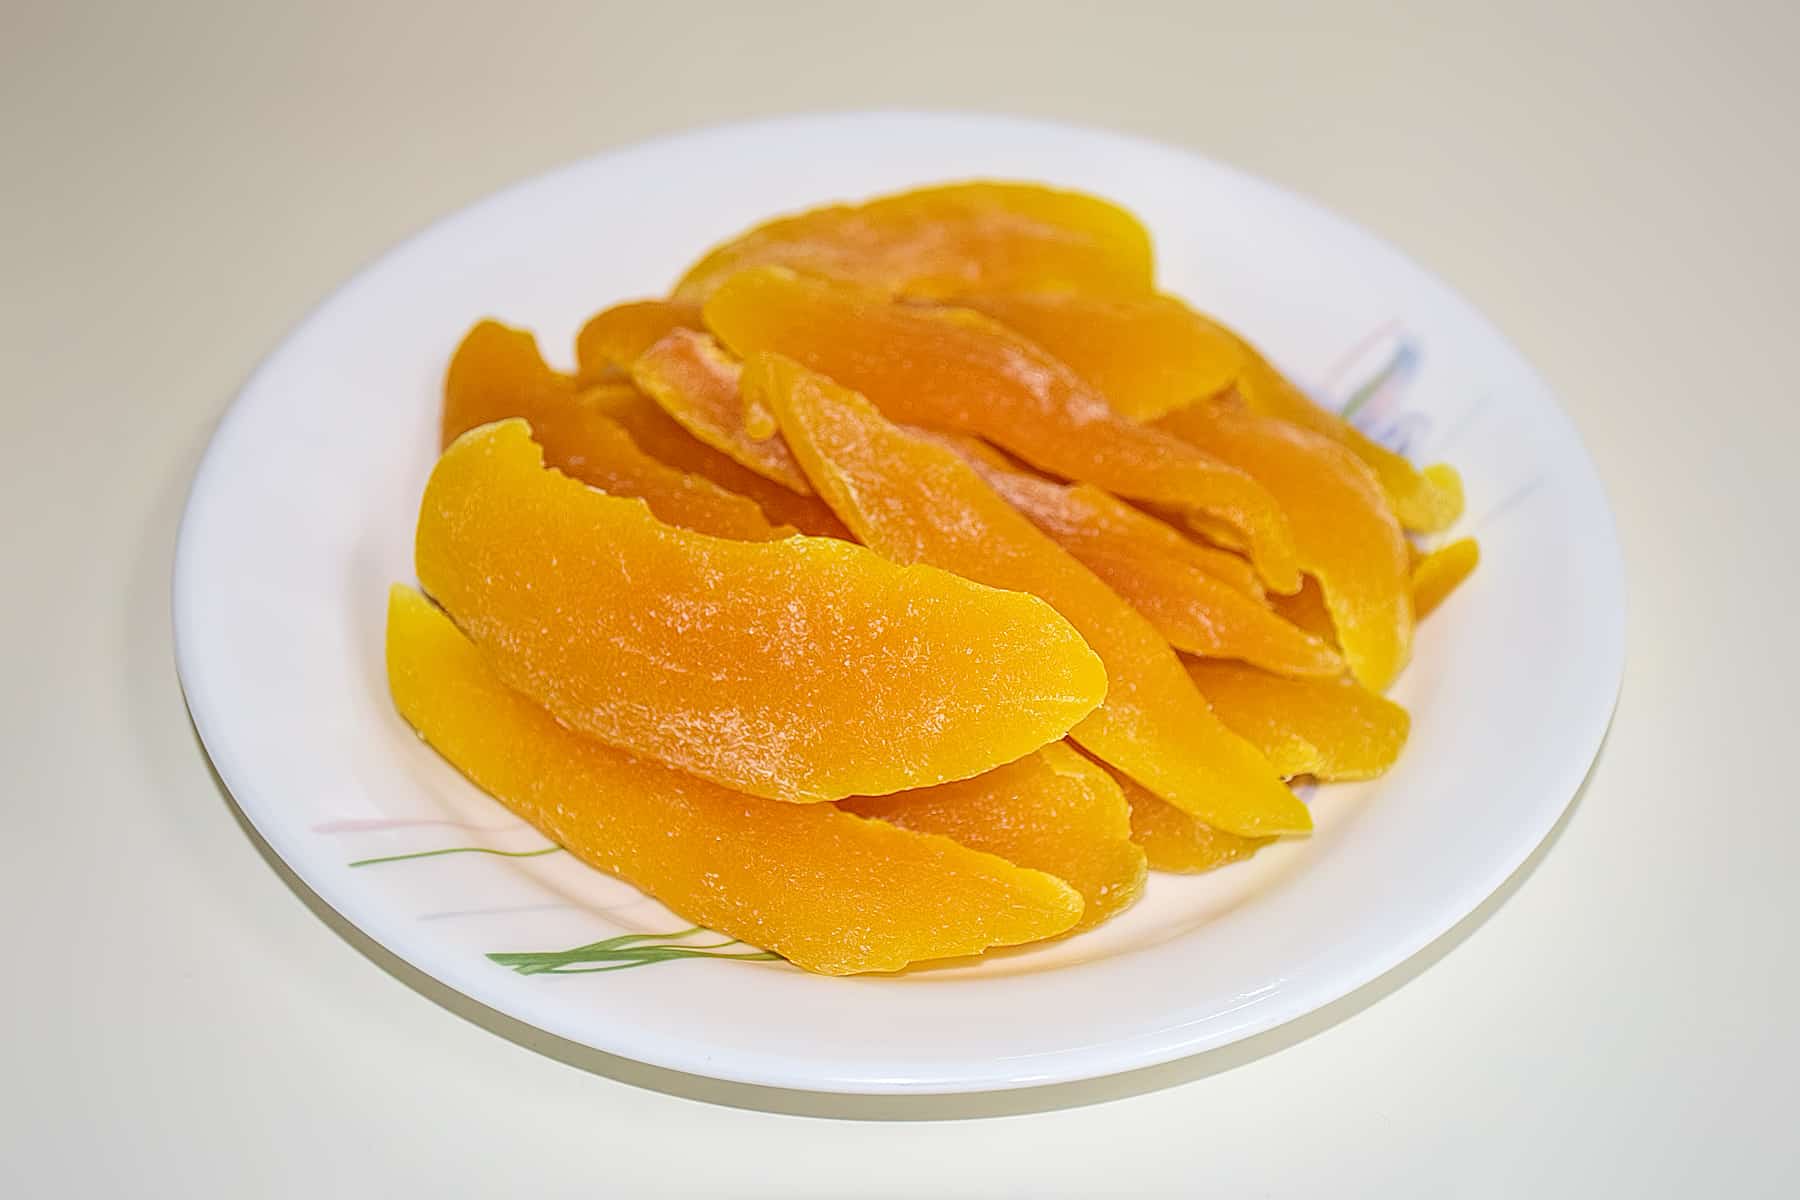 dried mango